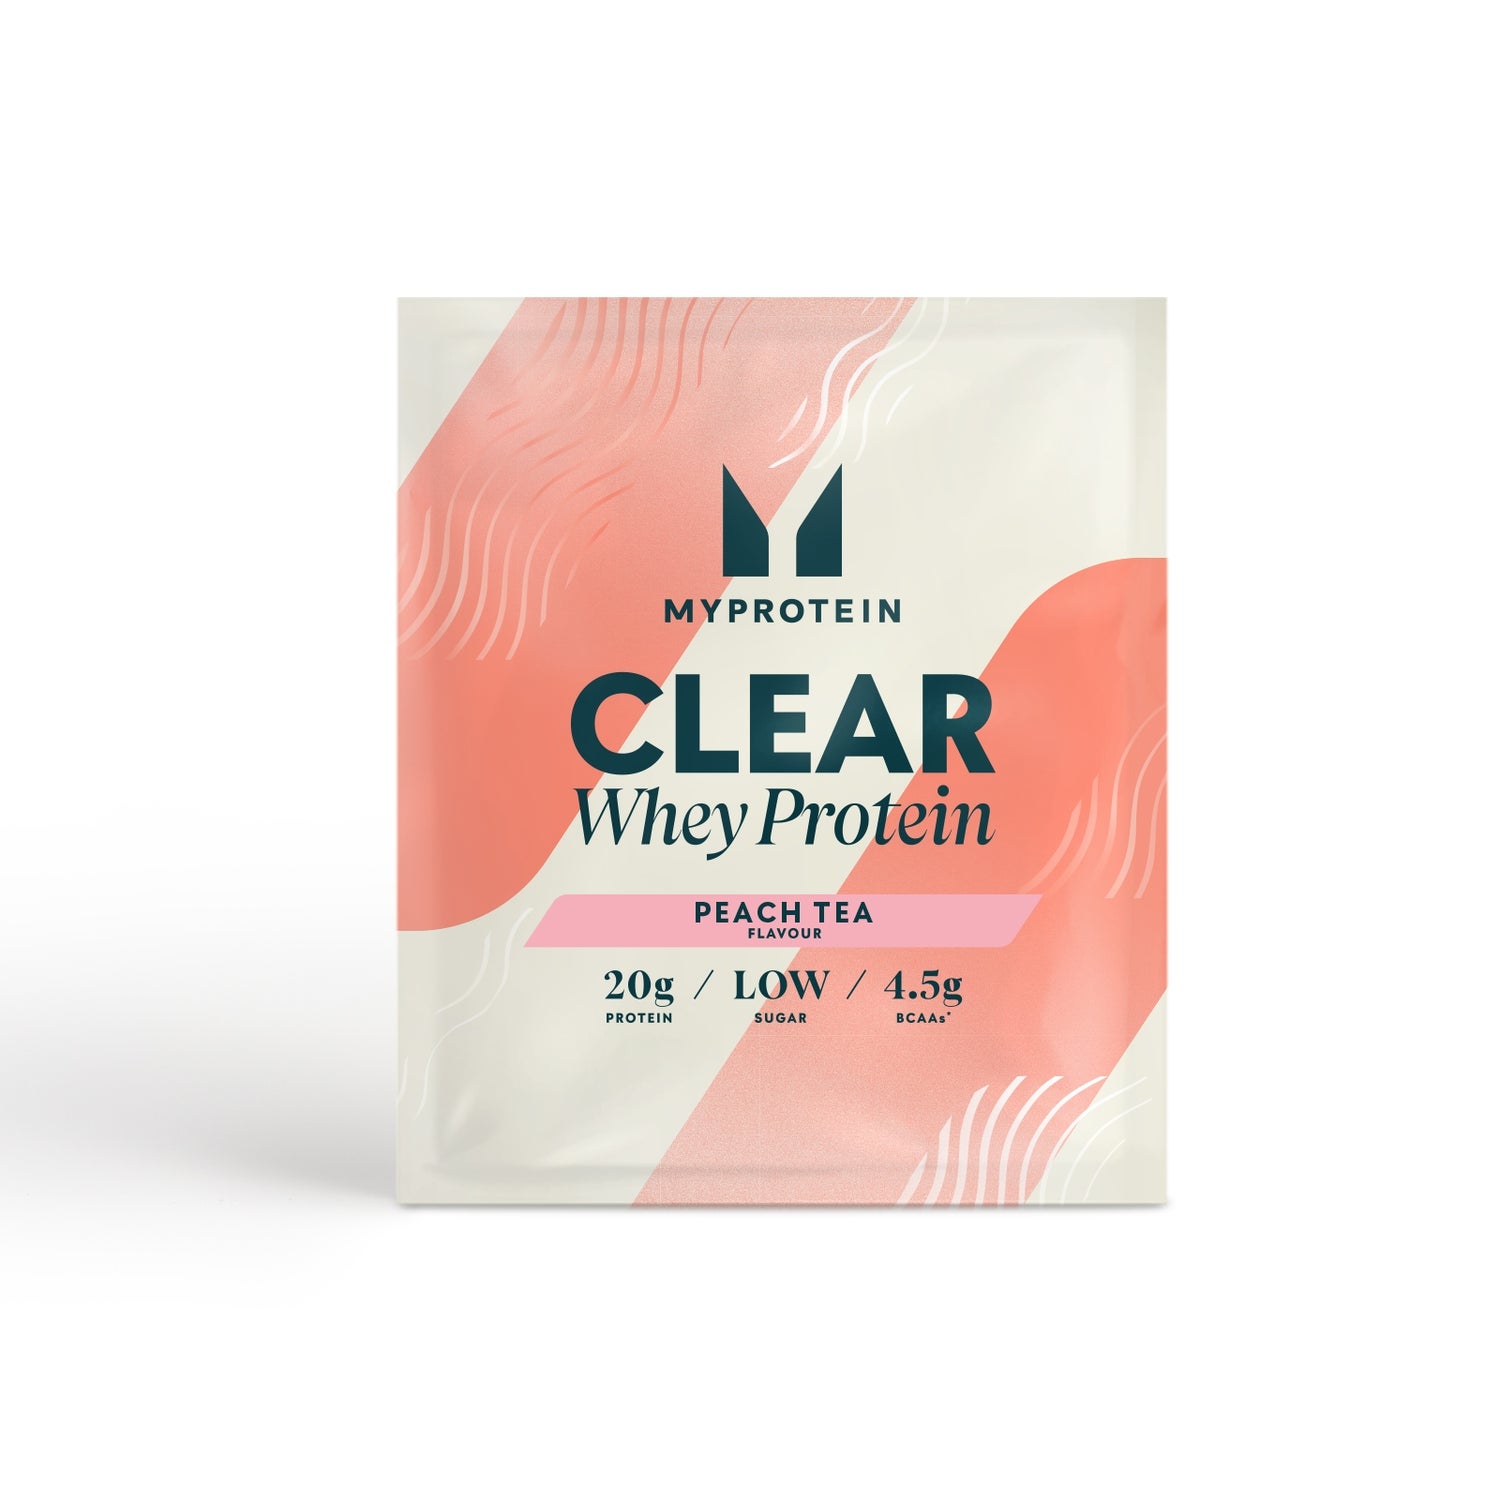 Clear Whey Protein (Sample) - 1servings - Peach Tea